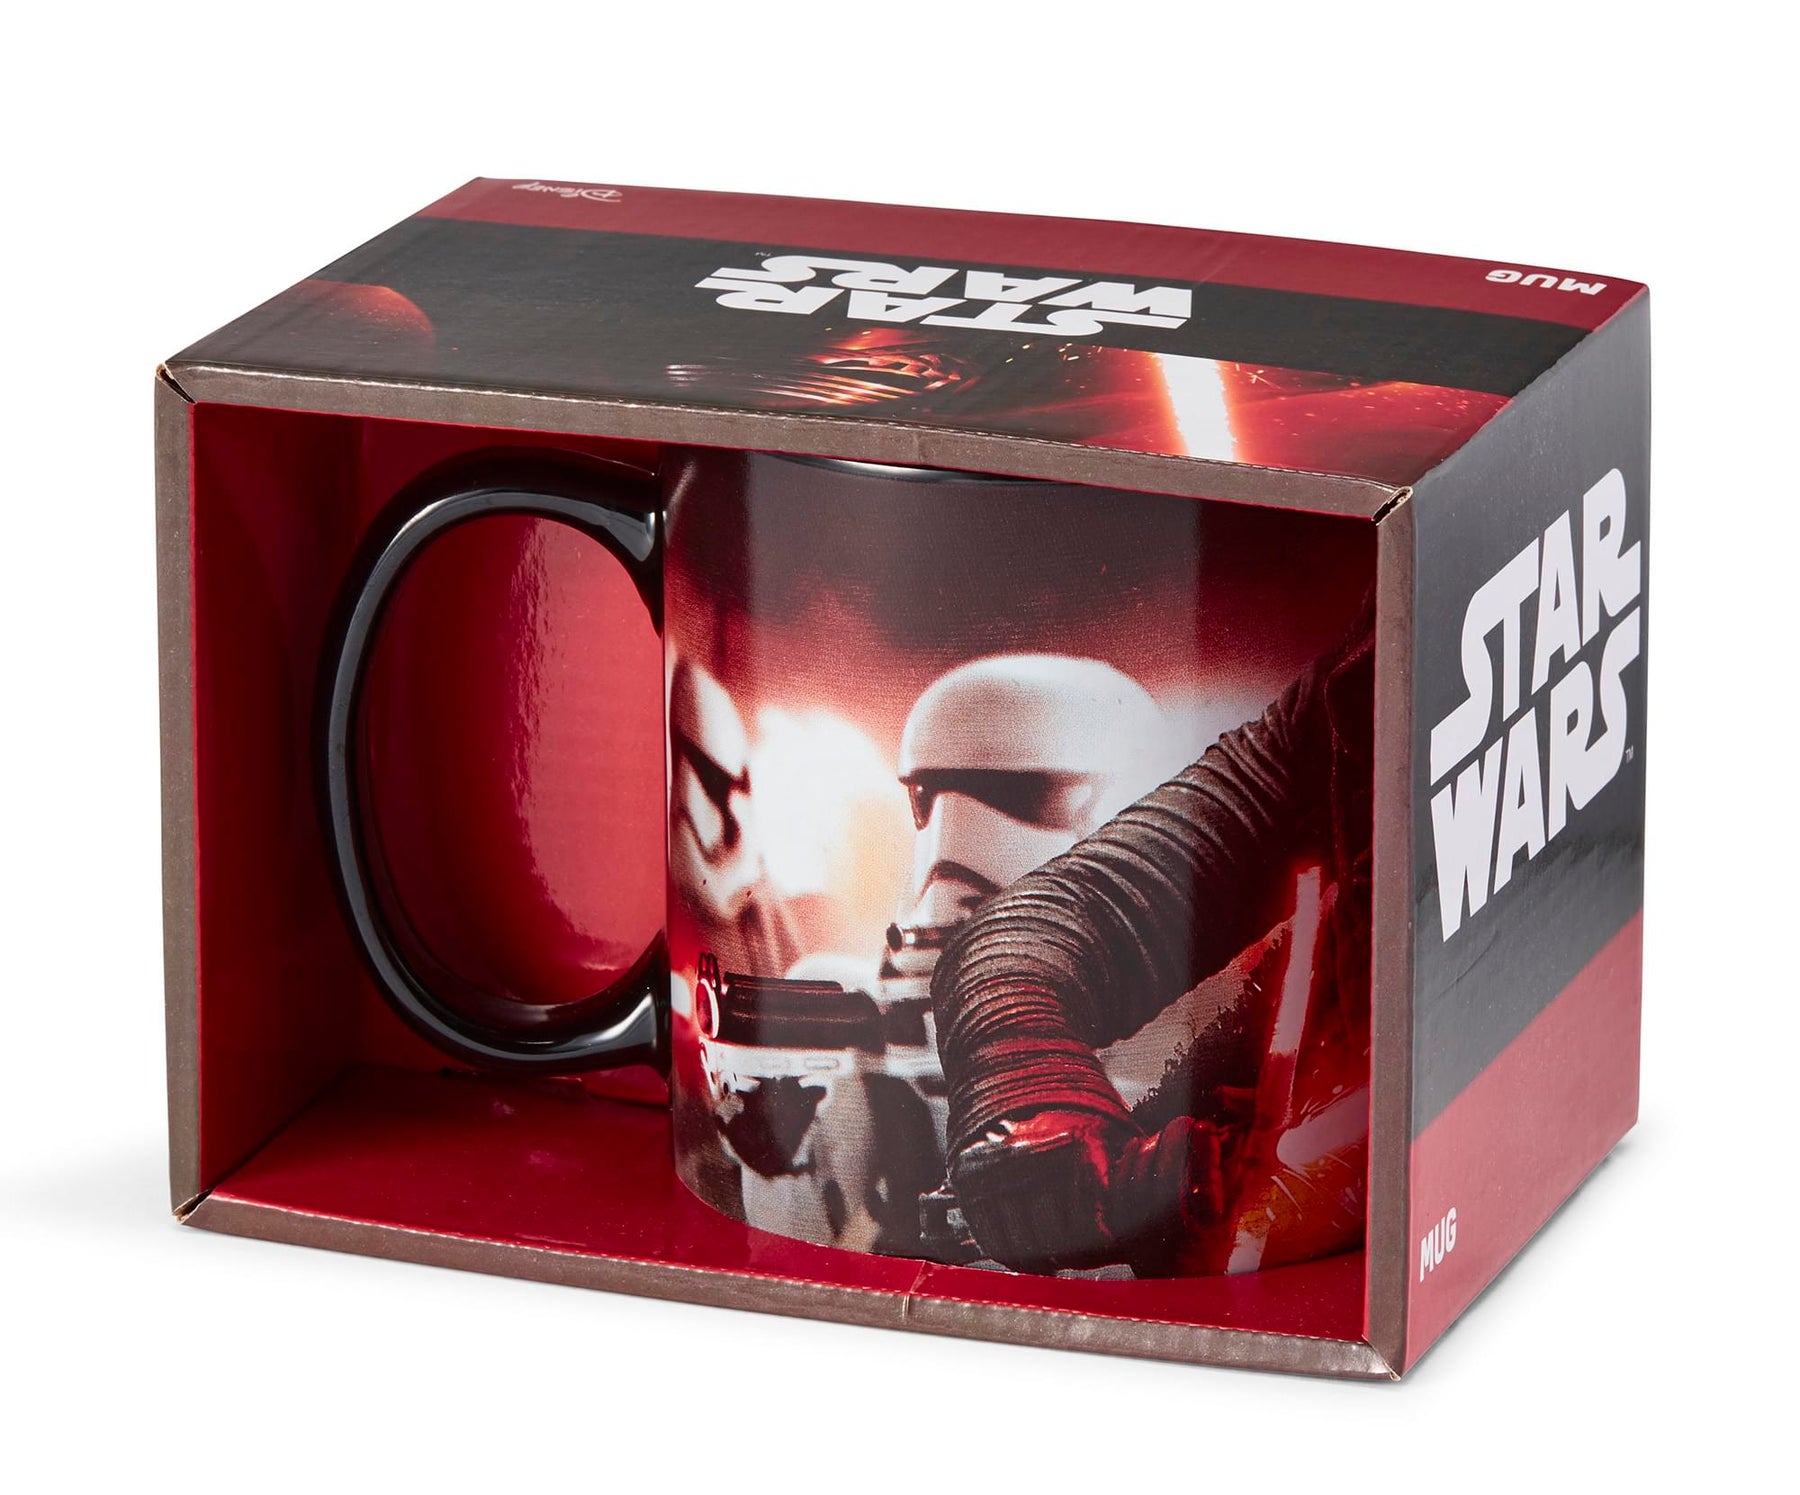 Star Wars Kylo Ren and Stormtroopers - 20oz Ceramic Mug